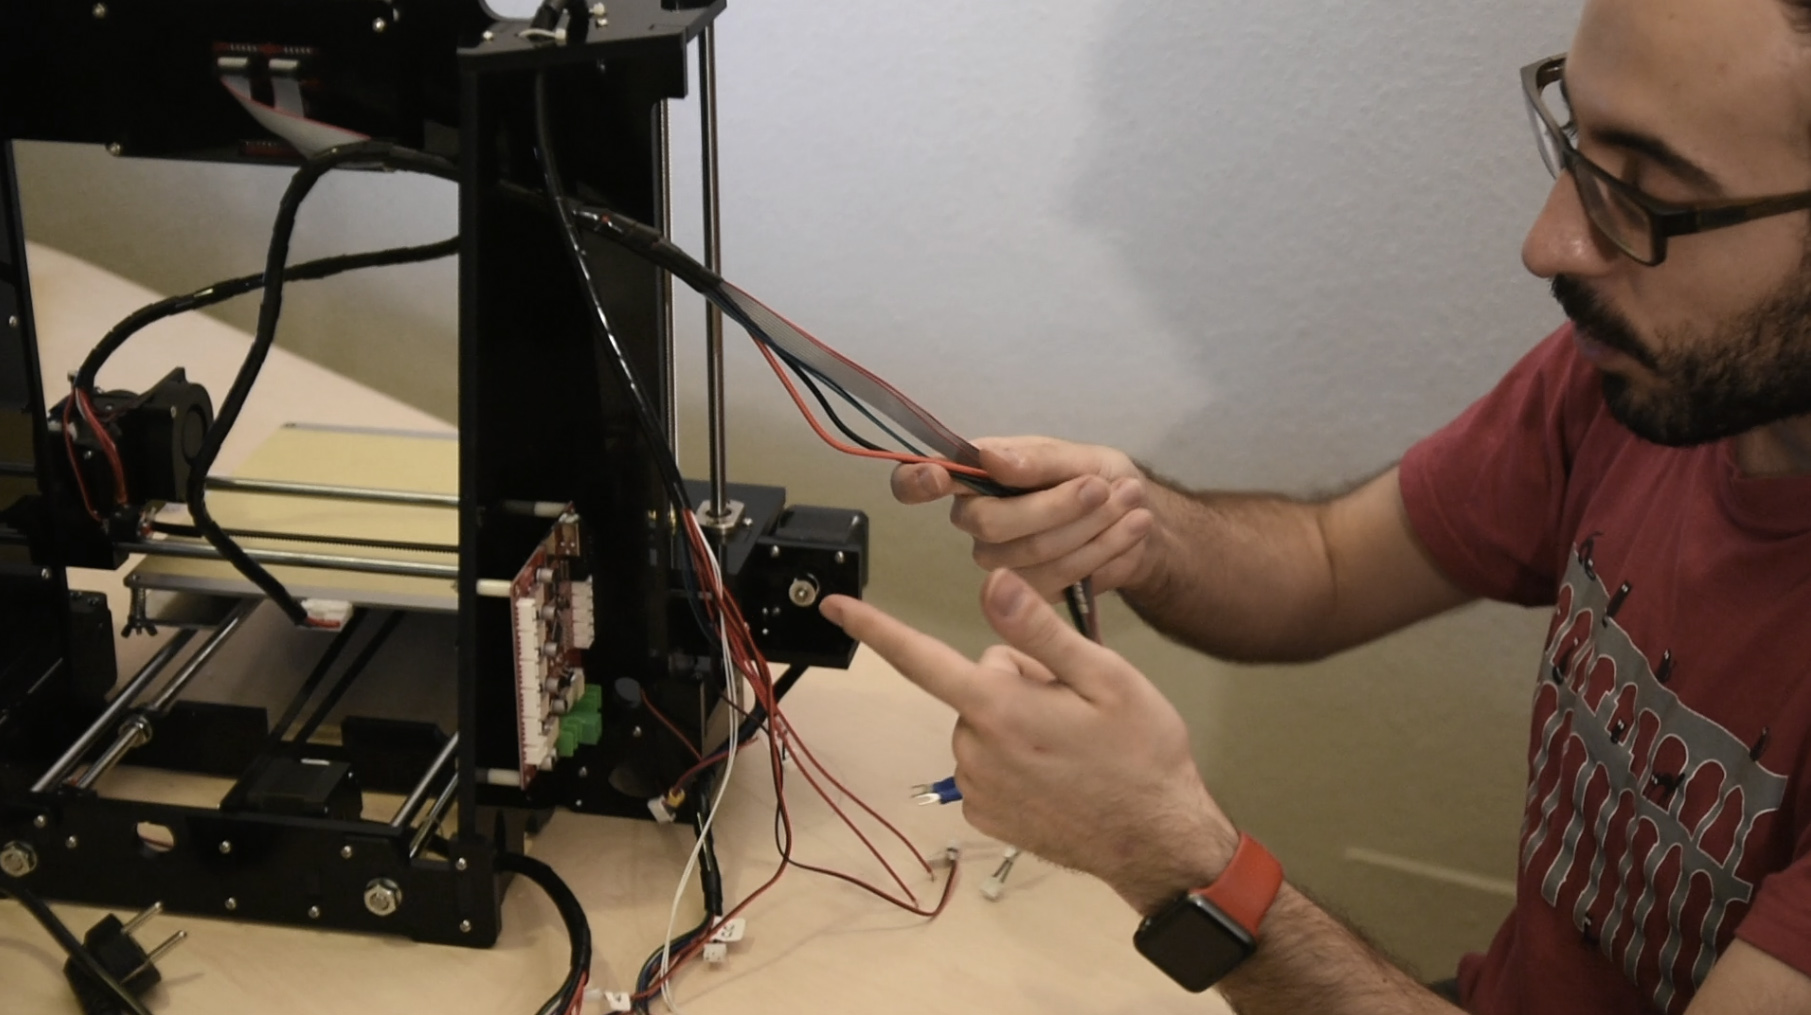 ¿Quieres aprender a montar tu propia impresora 3D?